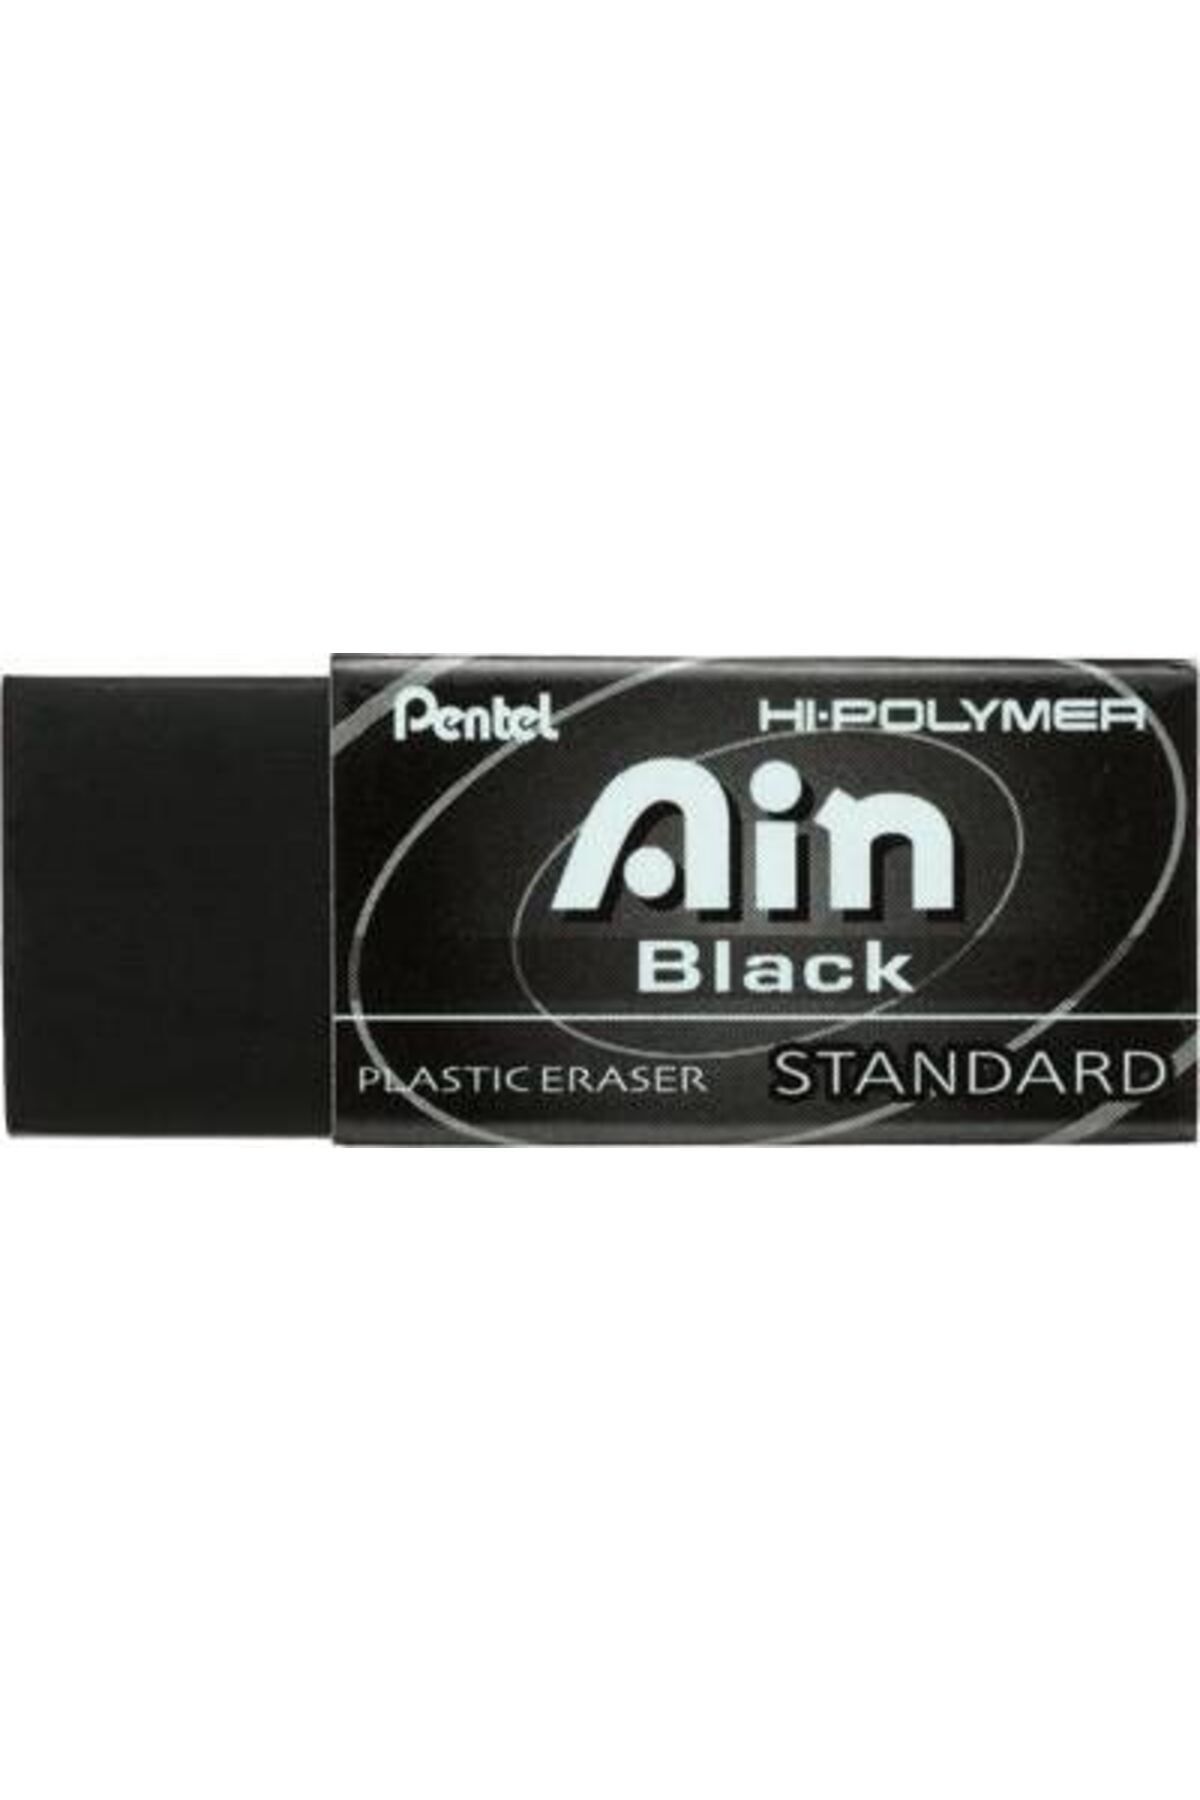 Pentel Hi-polymer Ain Black Silgi